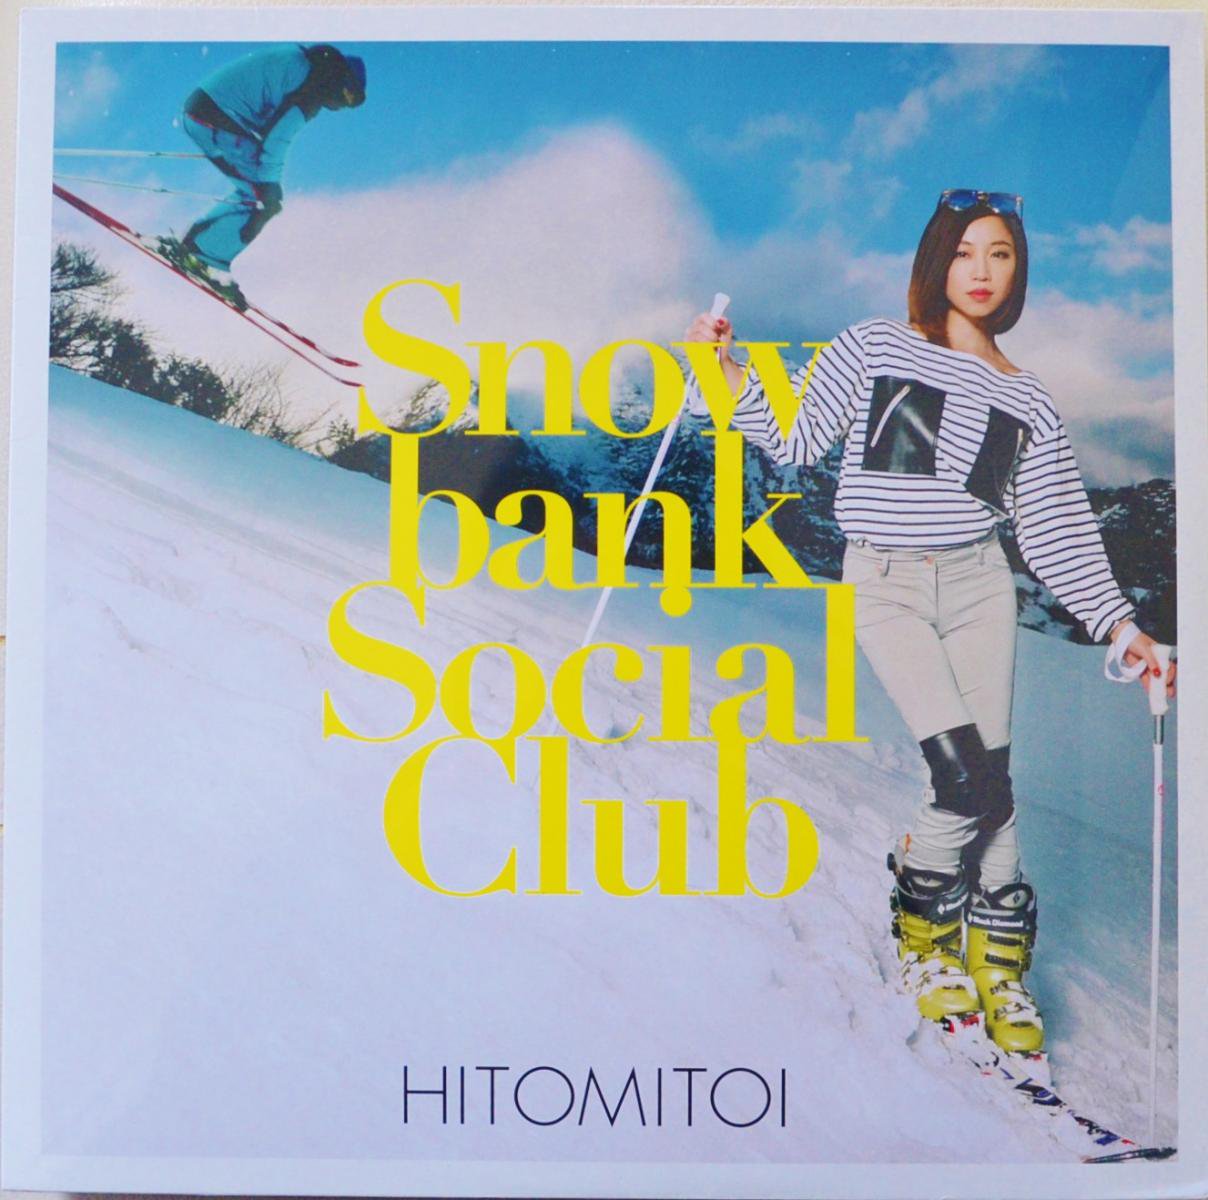 一十三十一 (HITOMITOI) / SNOWBANK SOCIAL CLUB (LP+7